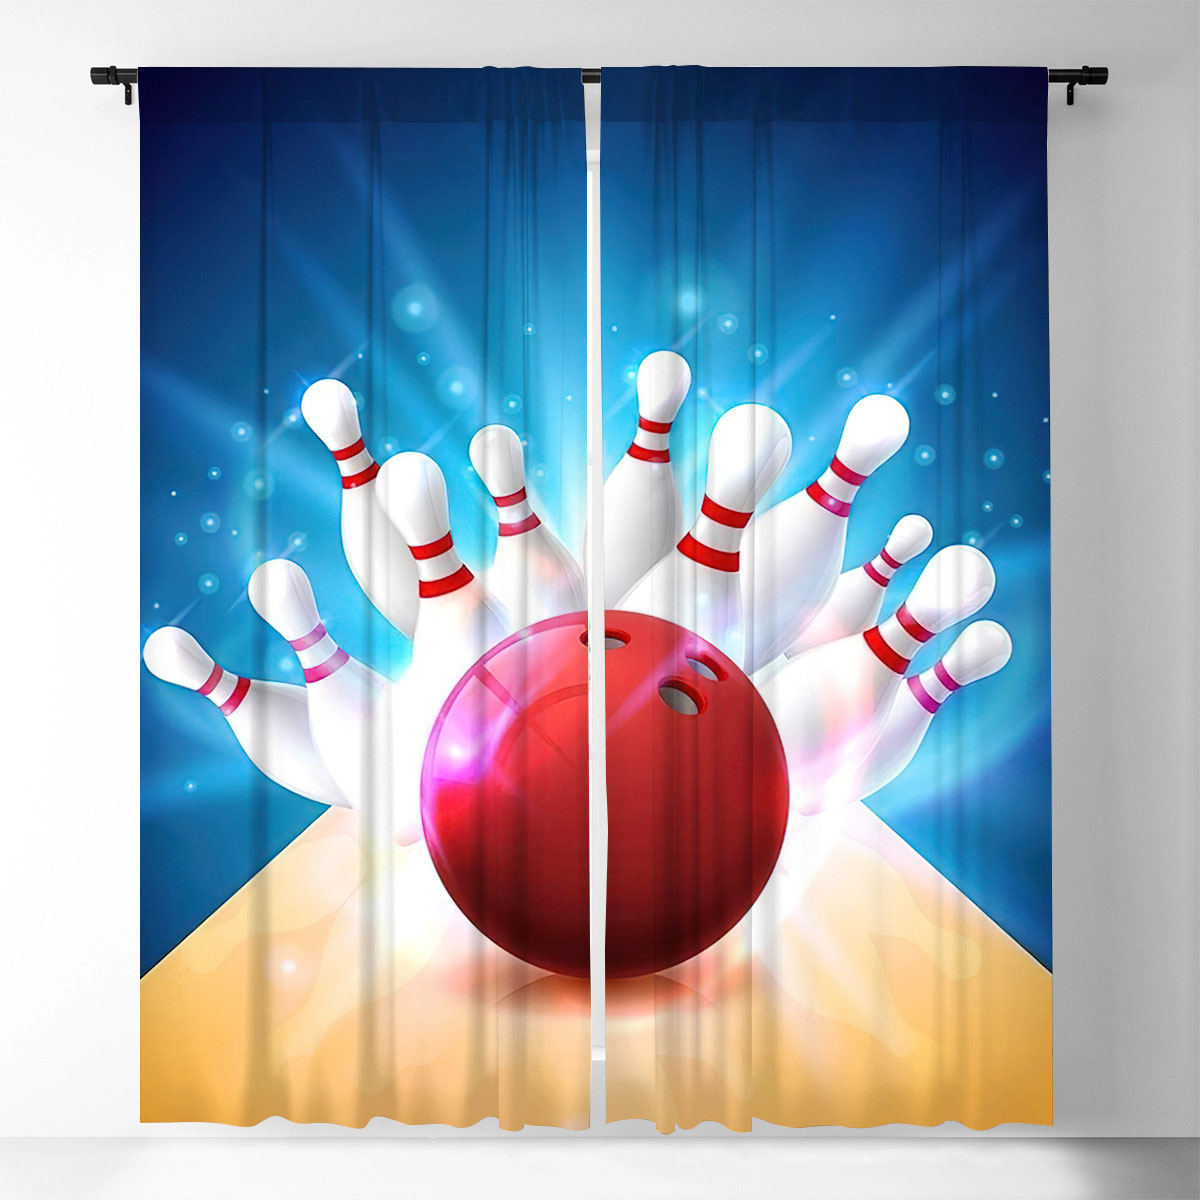 Bowling Strike Window Curtain